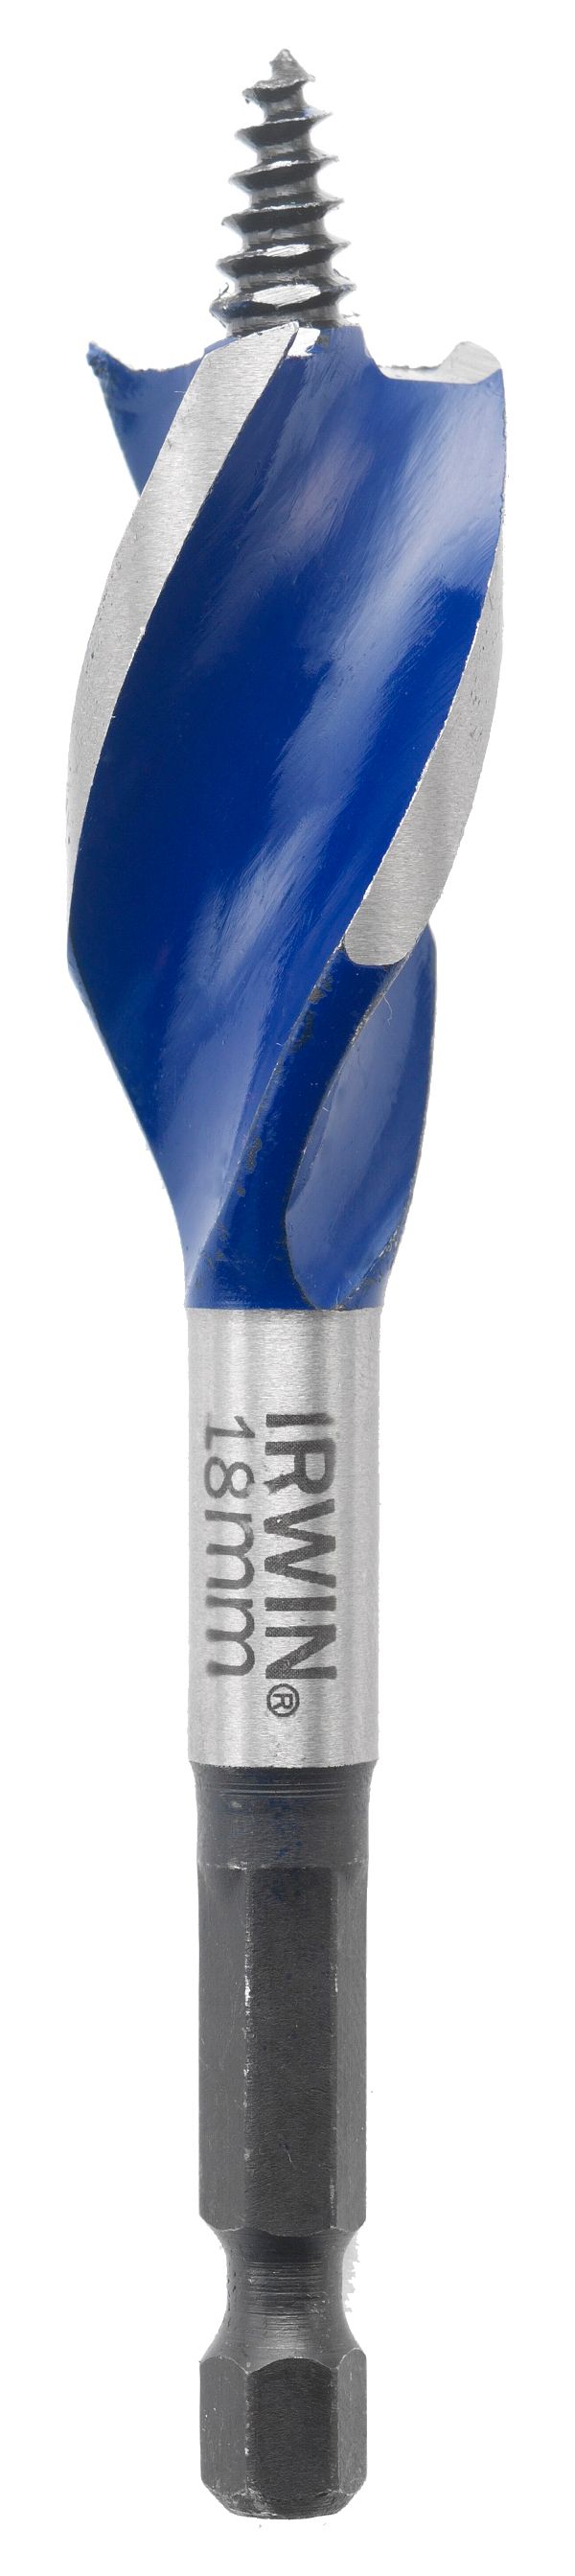 Image of Irwin 10506621 Ir x 6 Blue Groove Speedbor Wood Bit - 159 x 18mm